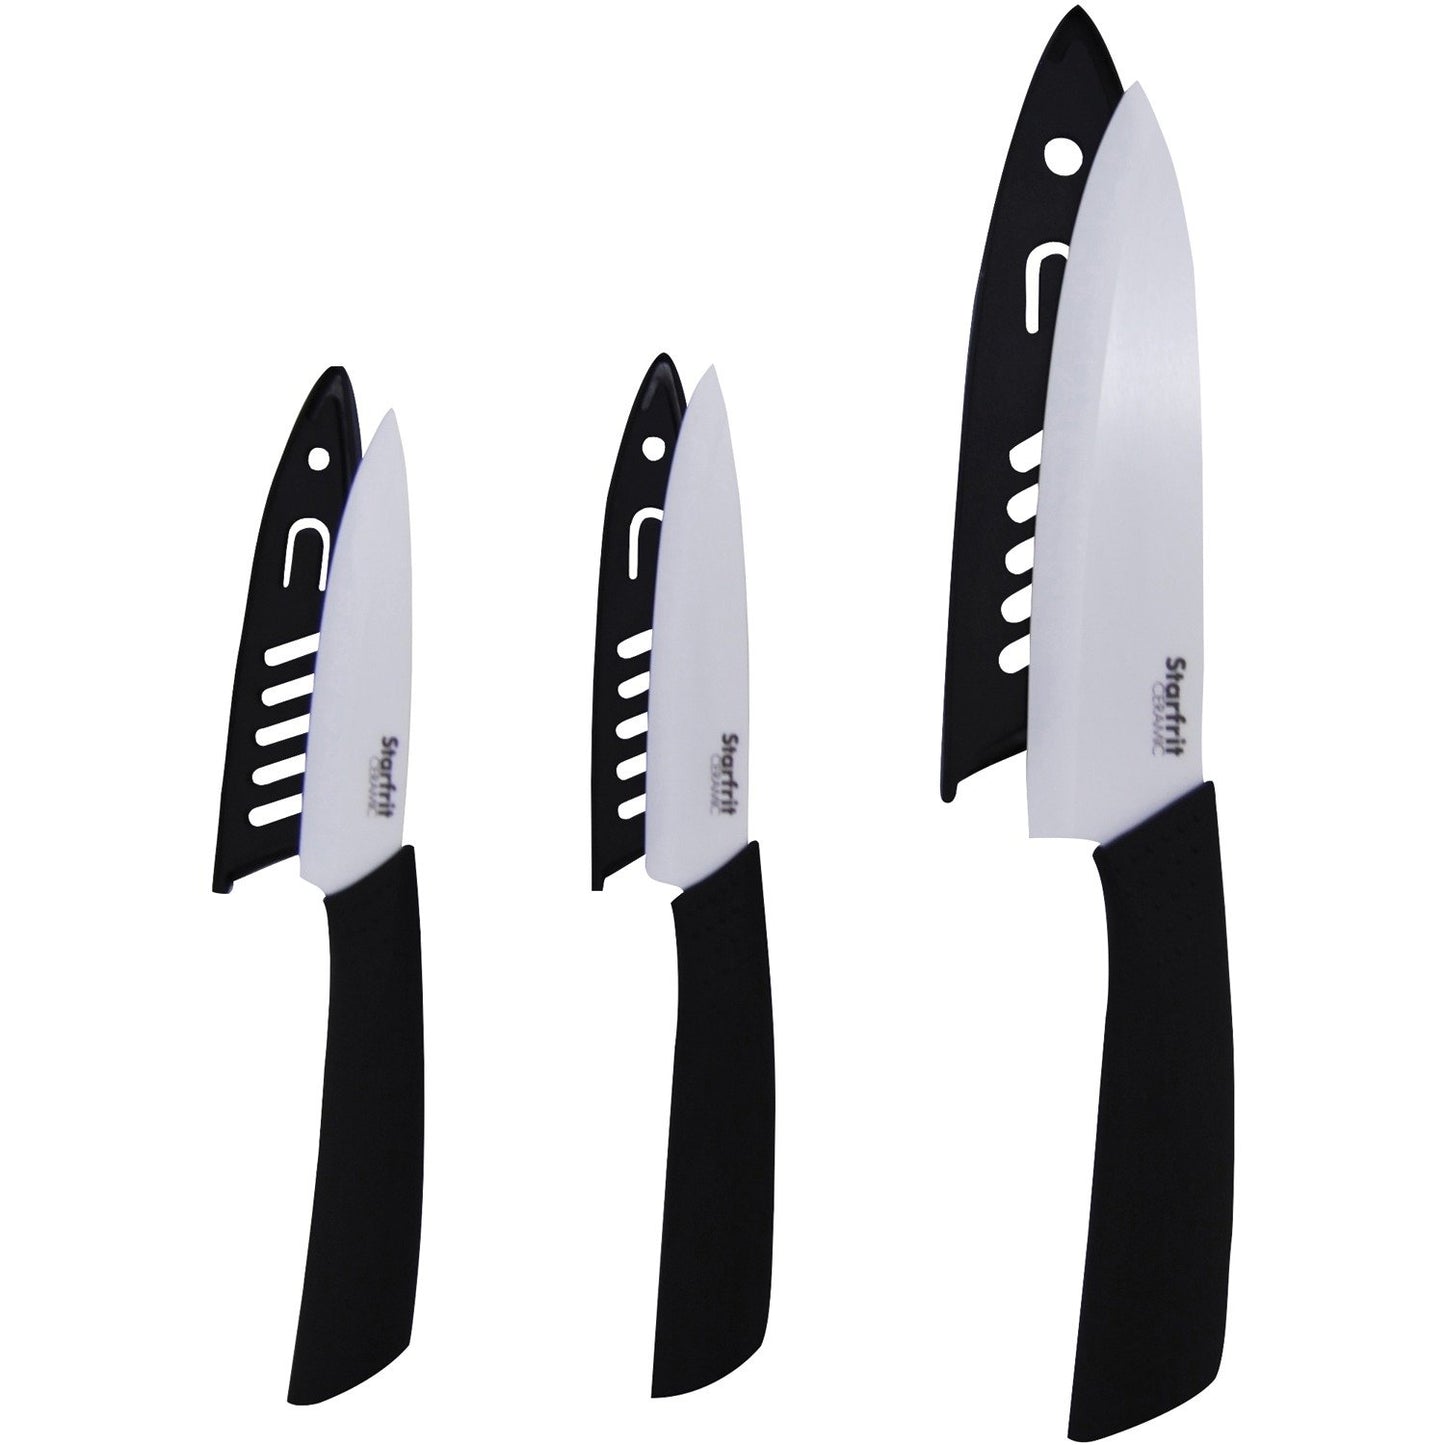 Starfrit 0928540060000 3-Piece Set of Ceramic Knives